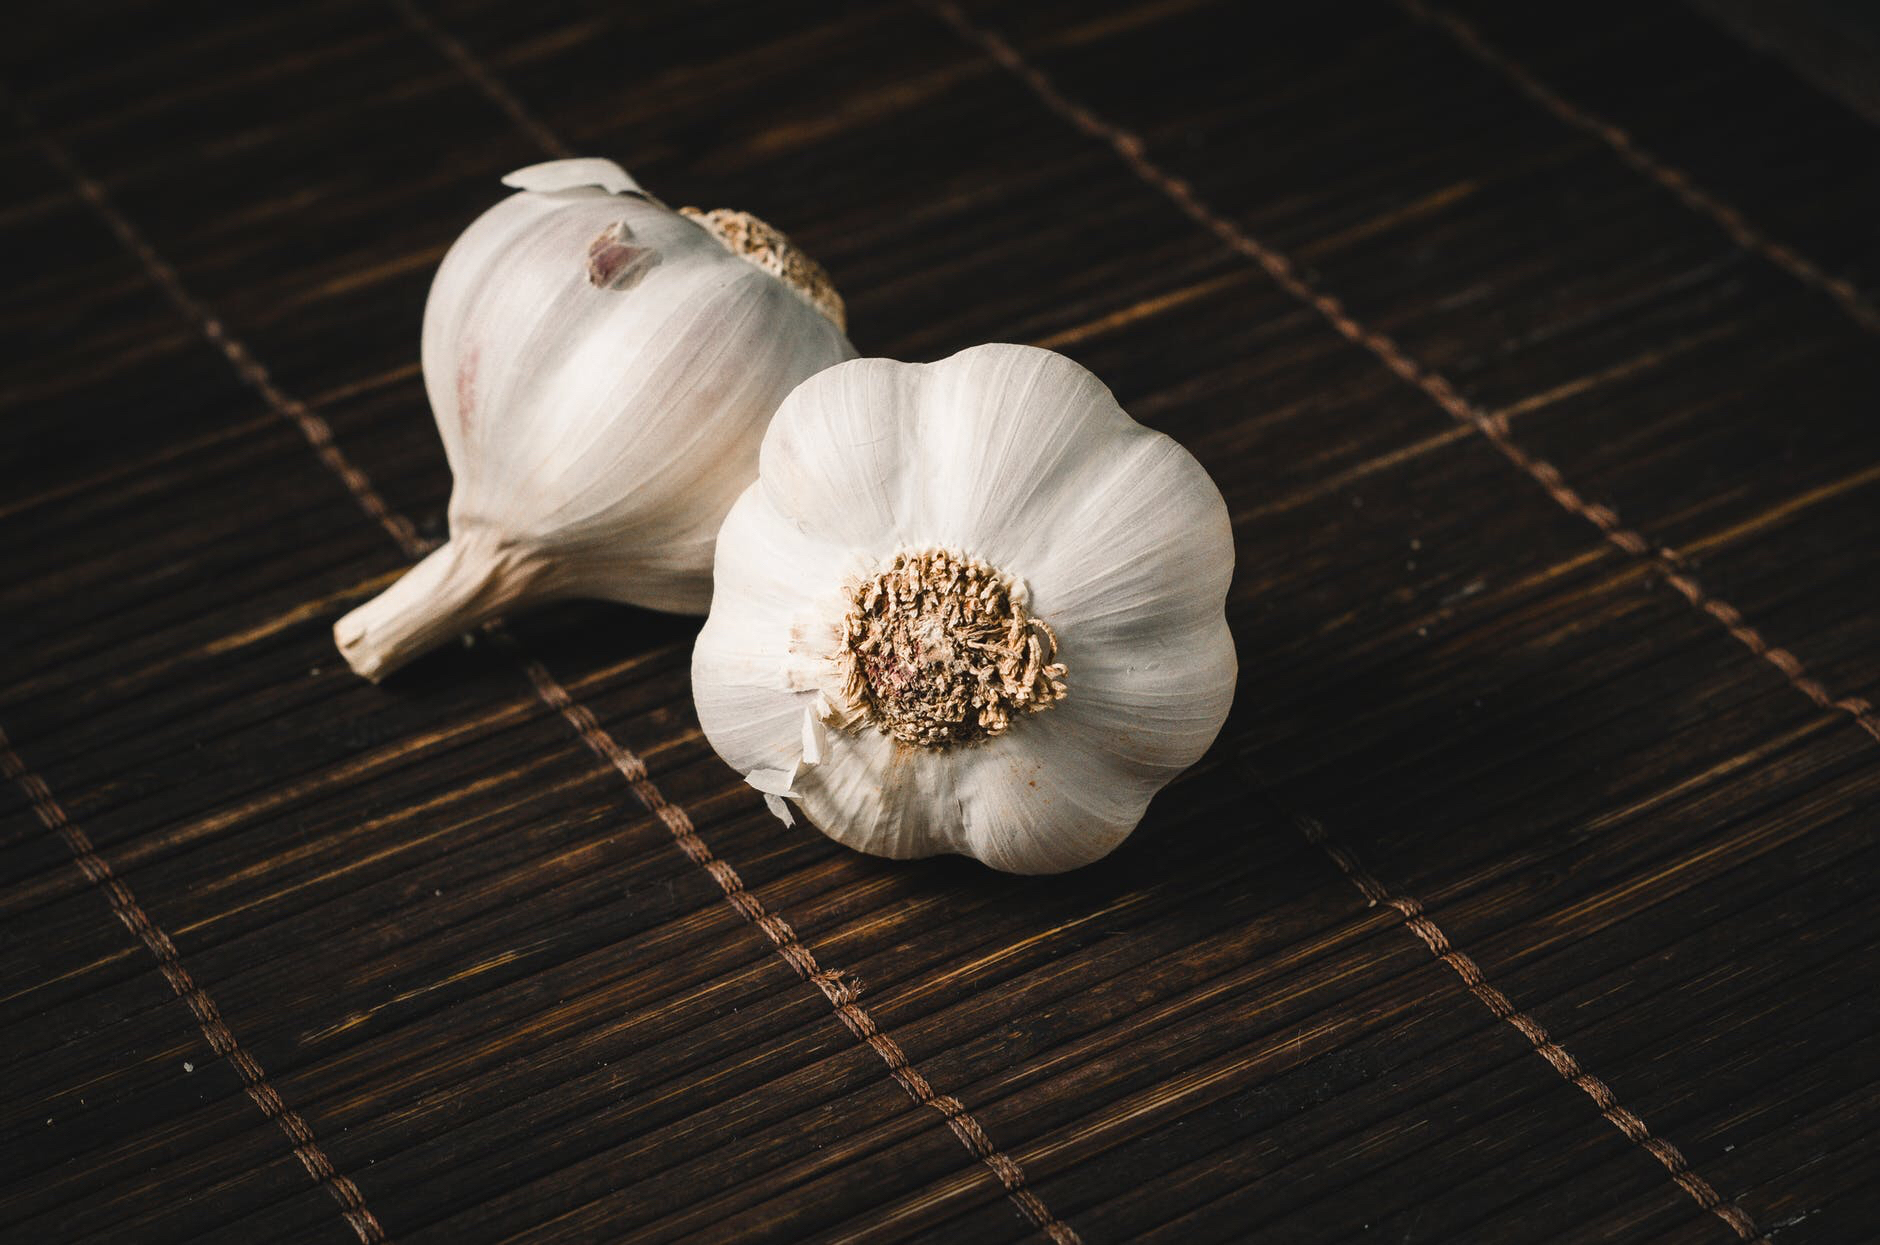 National Garlic Day